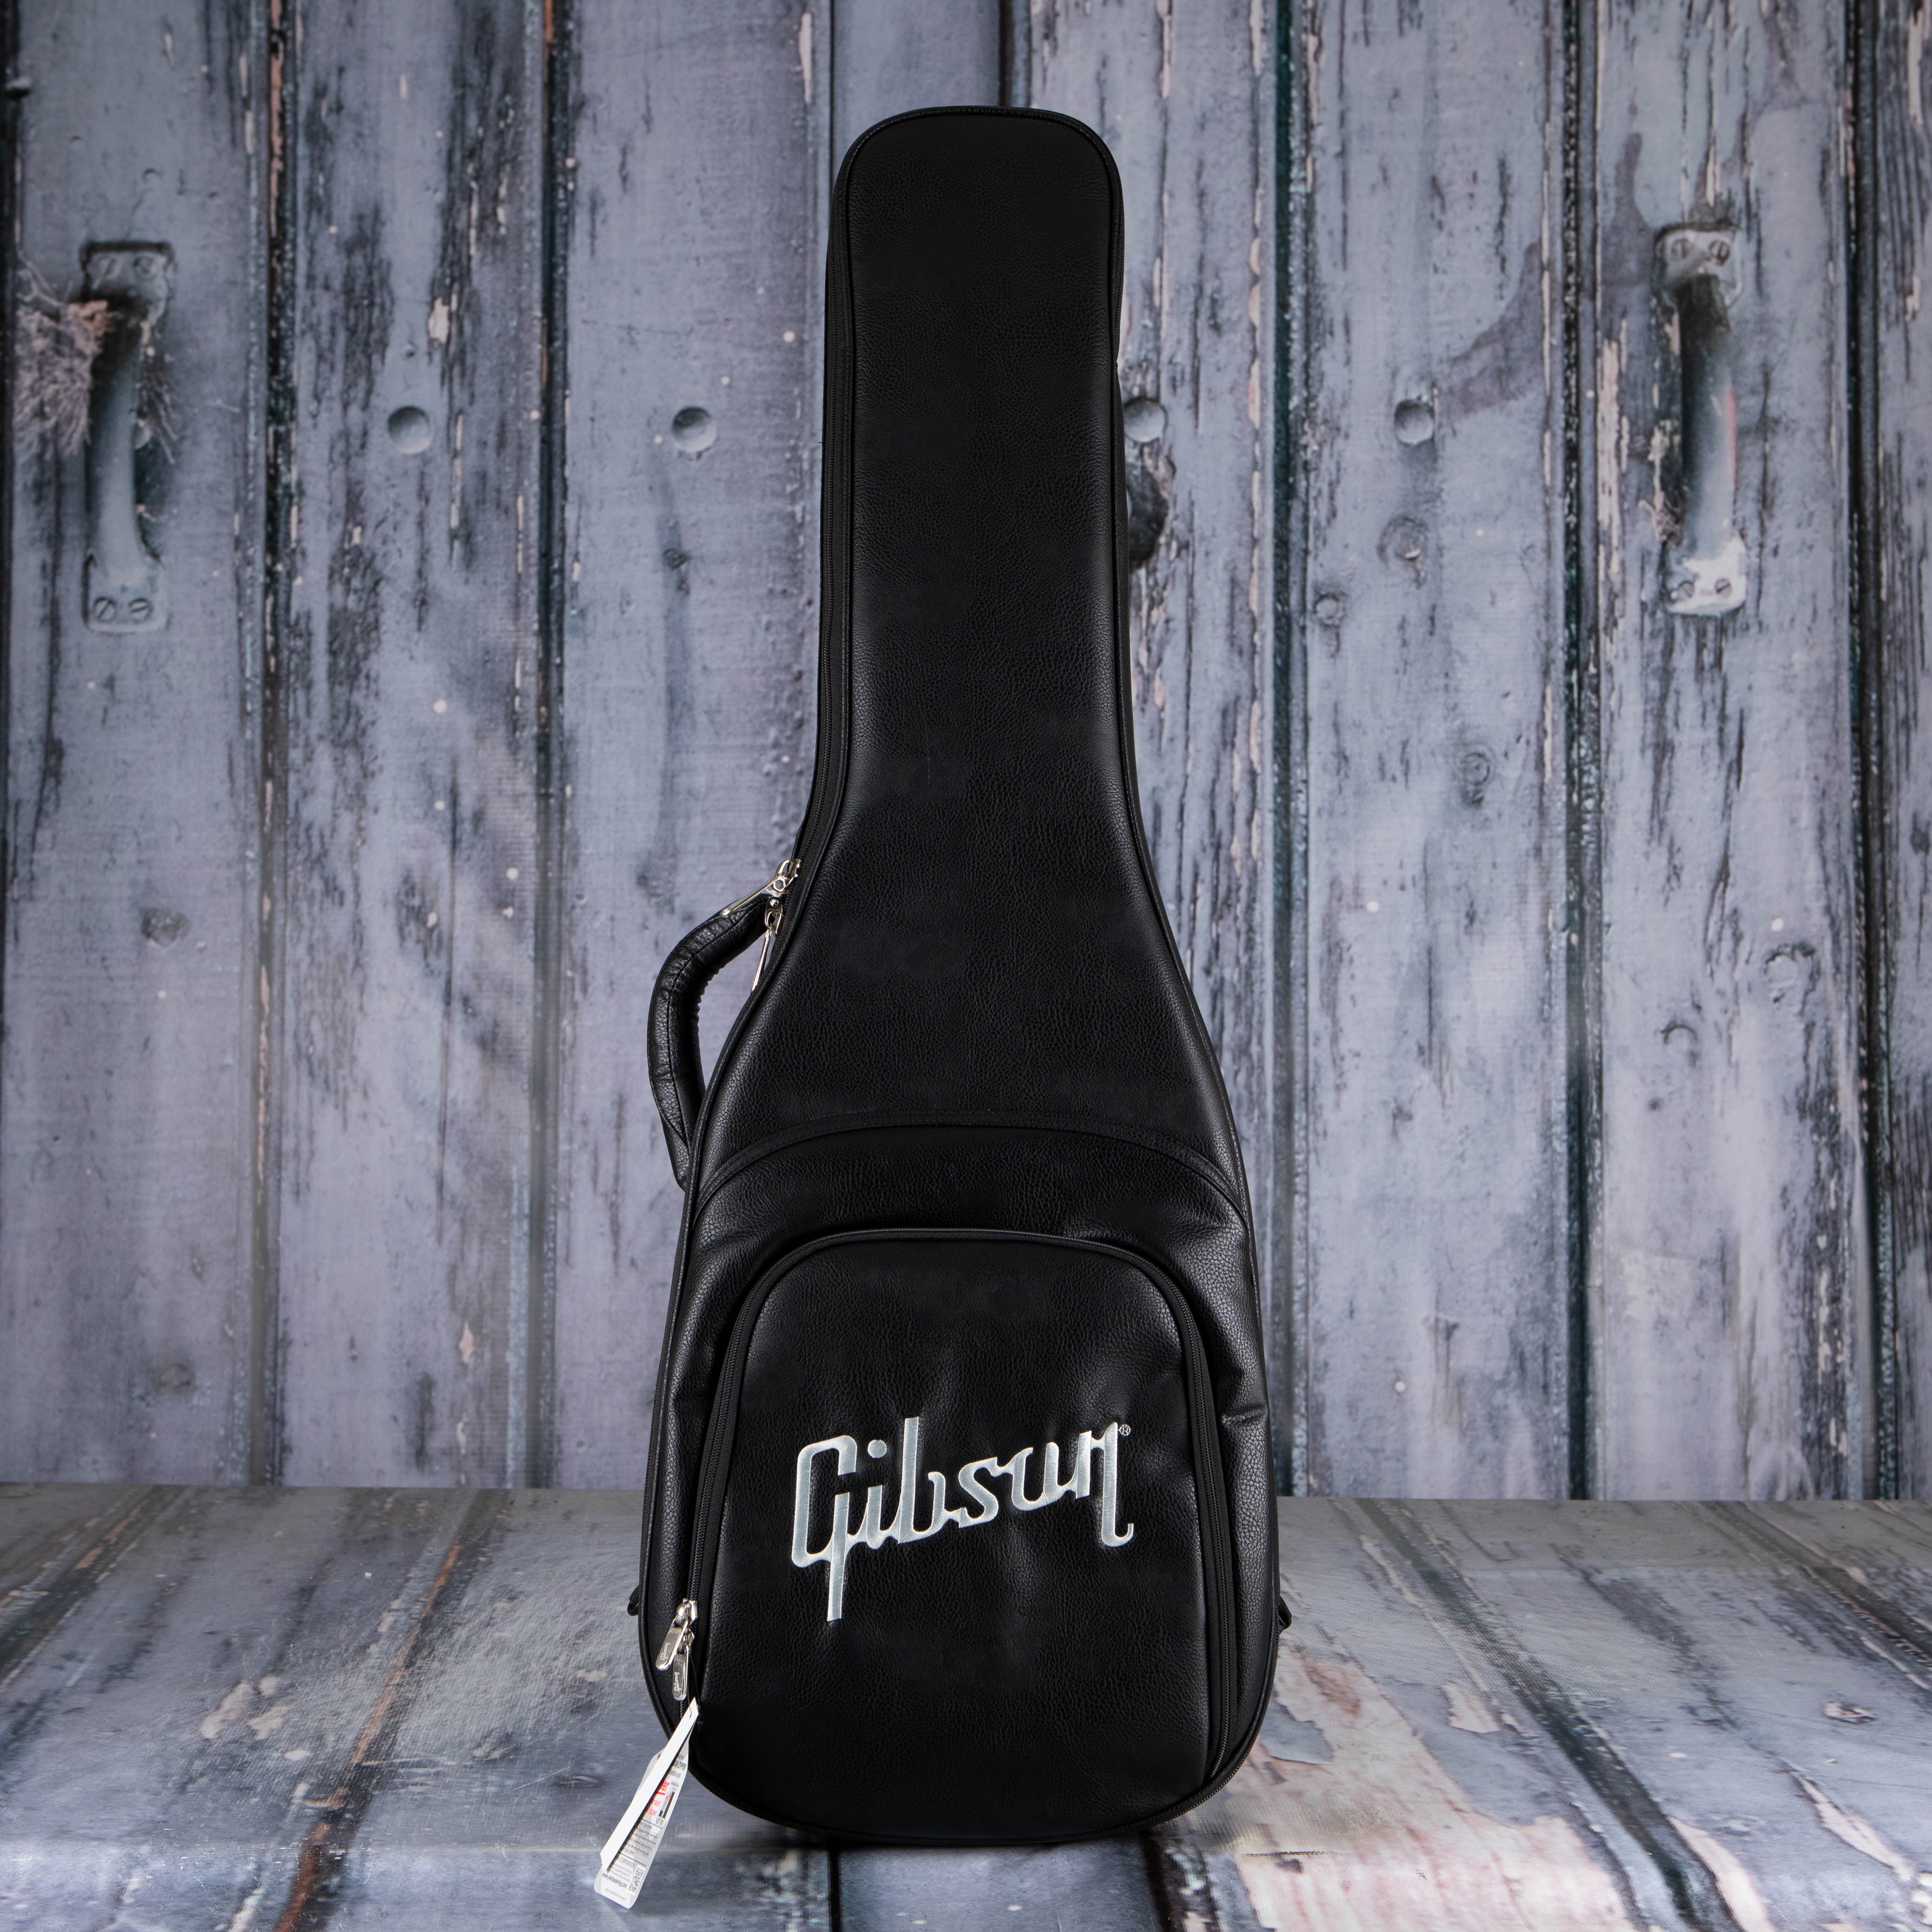 Gibson USA SG Standard Electric Guitar, Translucent Teal, bag